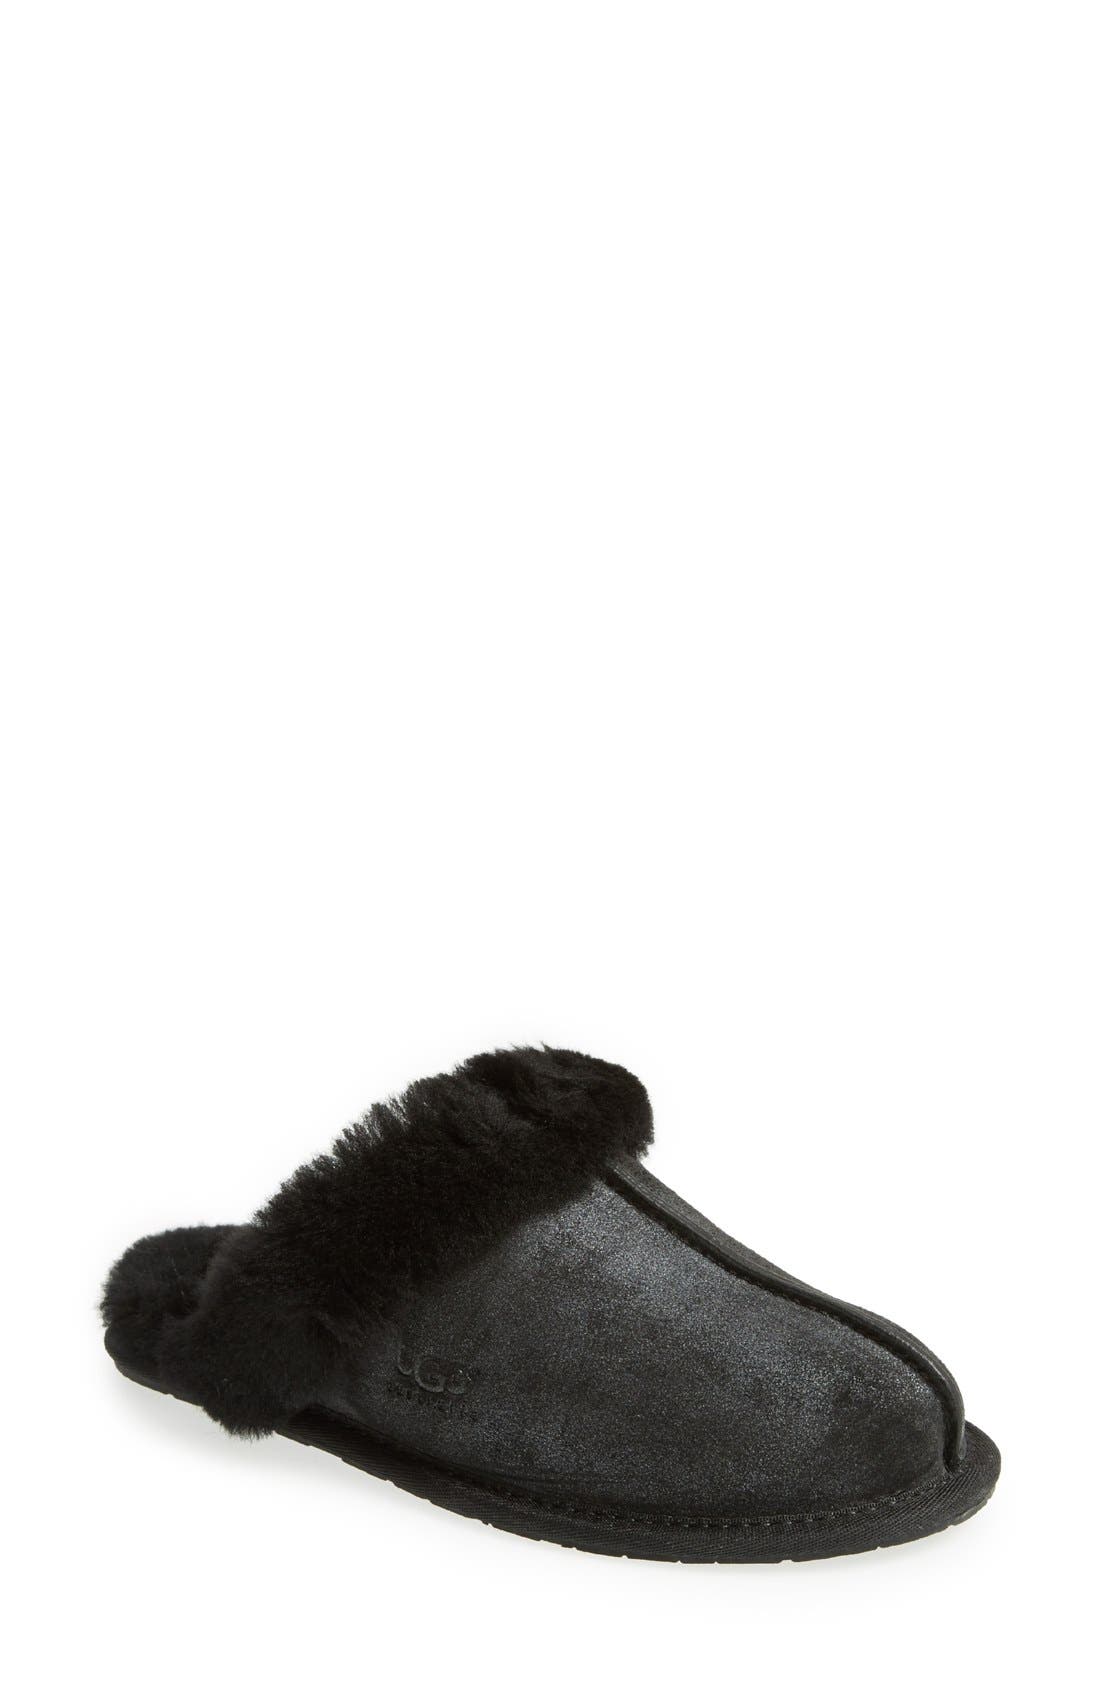 nordstrom ugg slippers